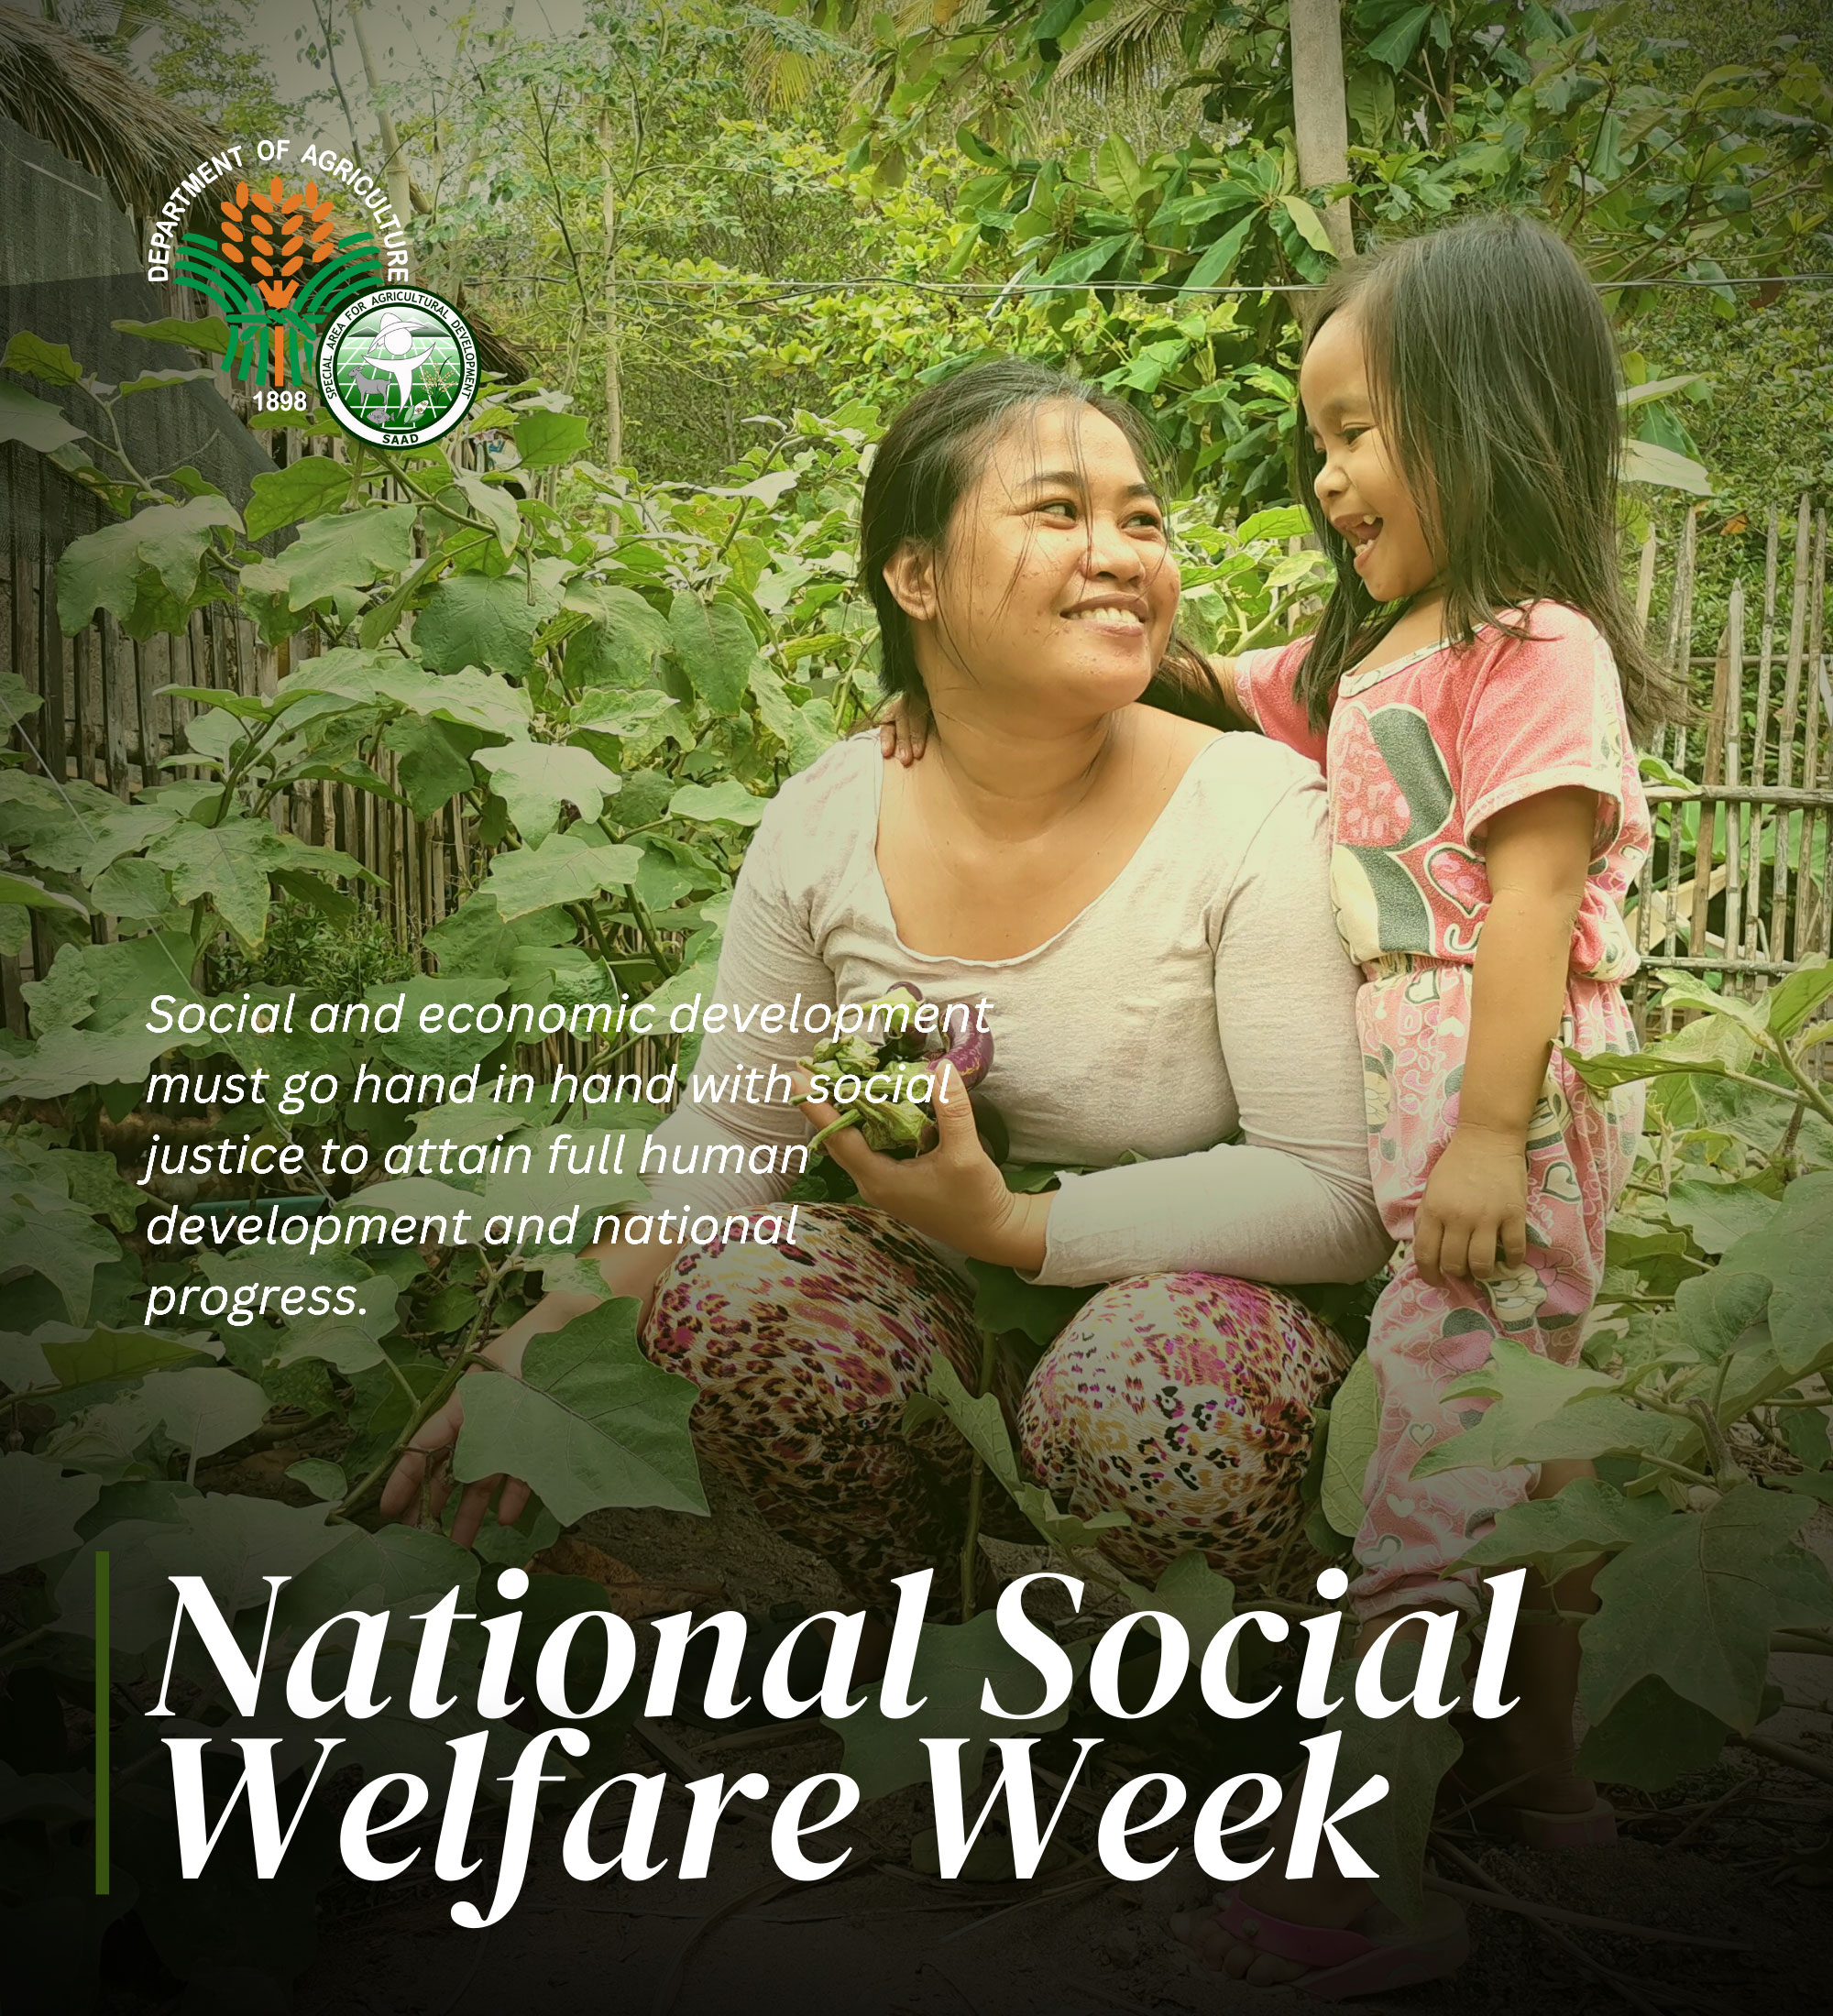 In celebration of National Social Welfare Week